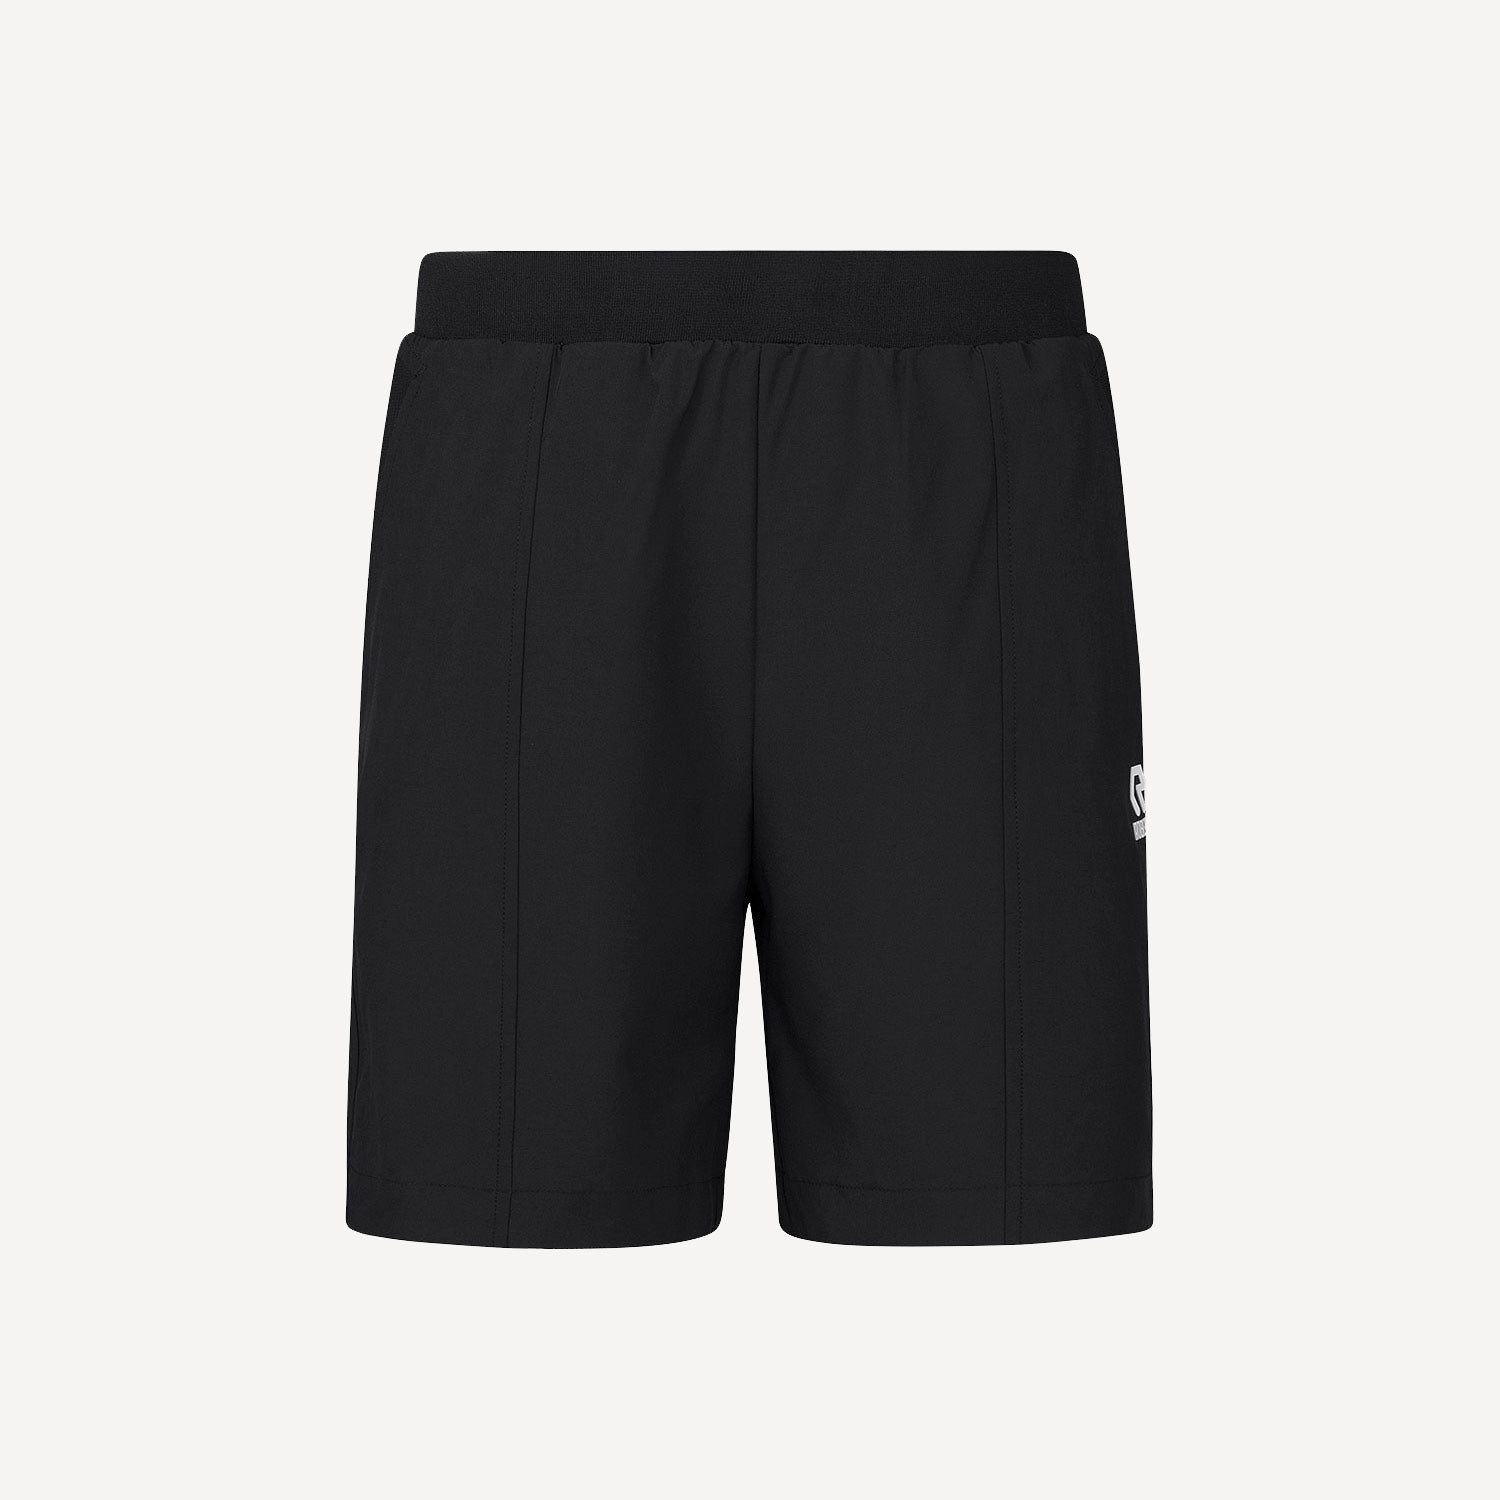 Robey Ace Men's Tennis Shorts - Black (1)